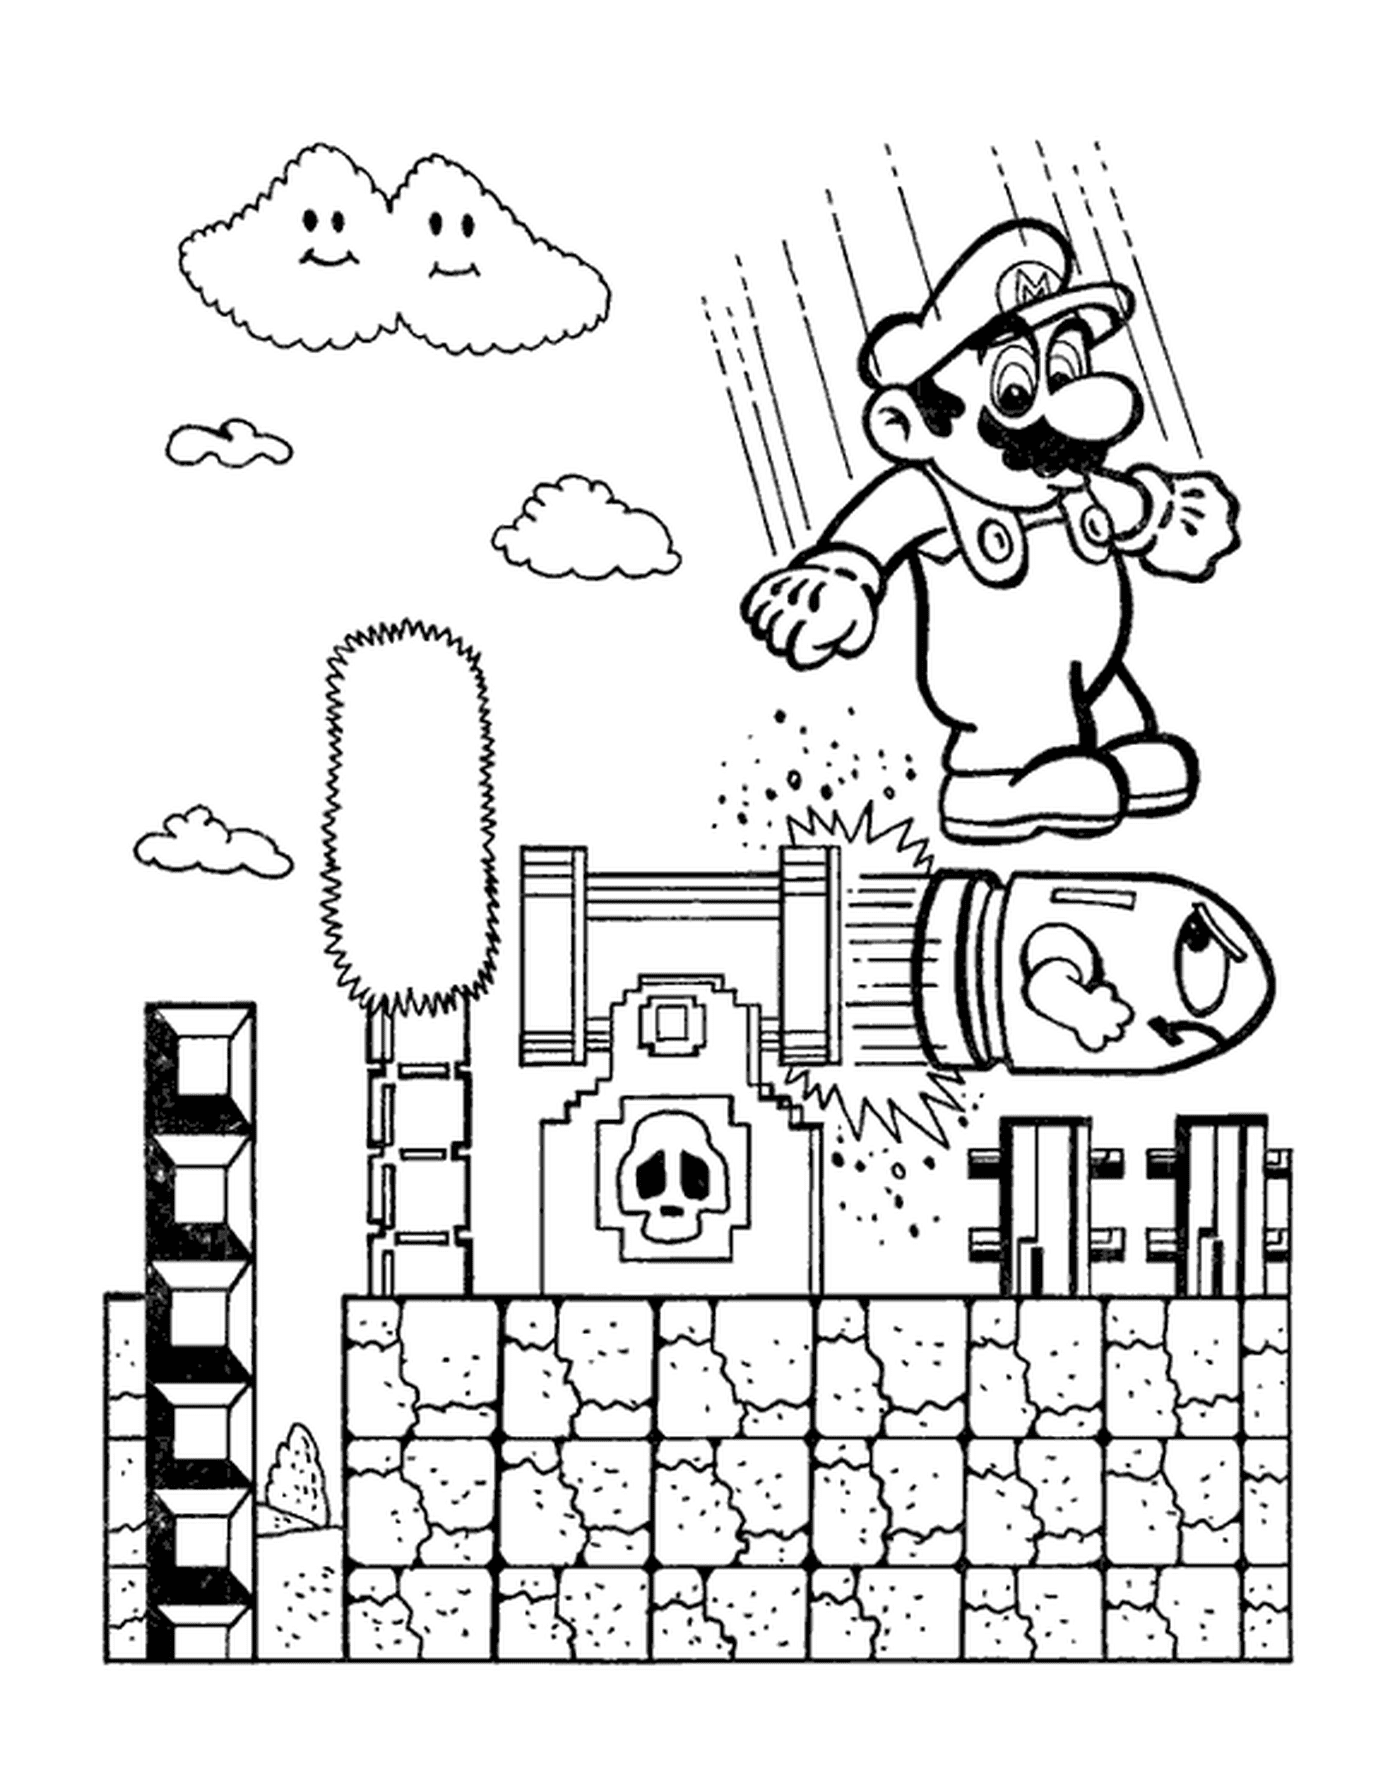  Mario salta sobre uma bomba perigosa 